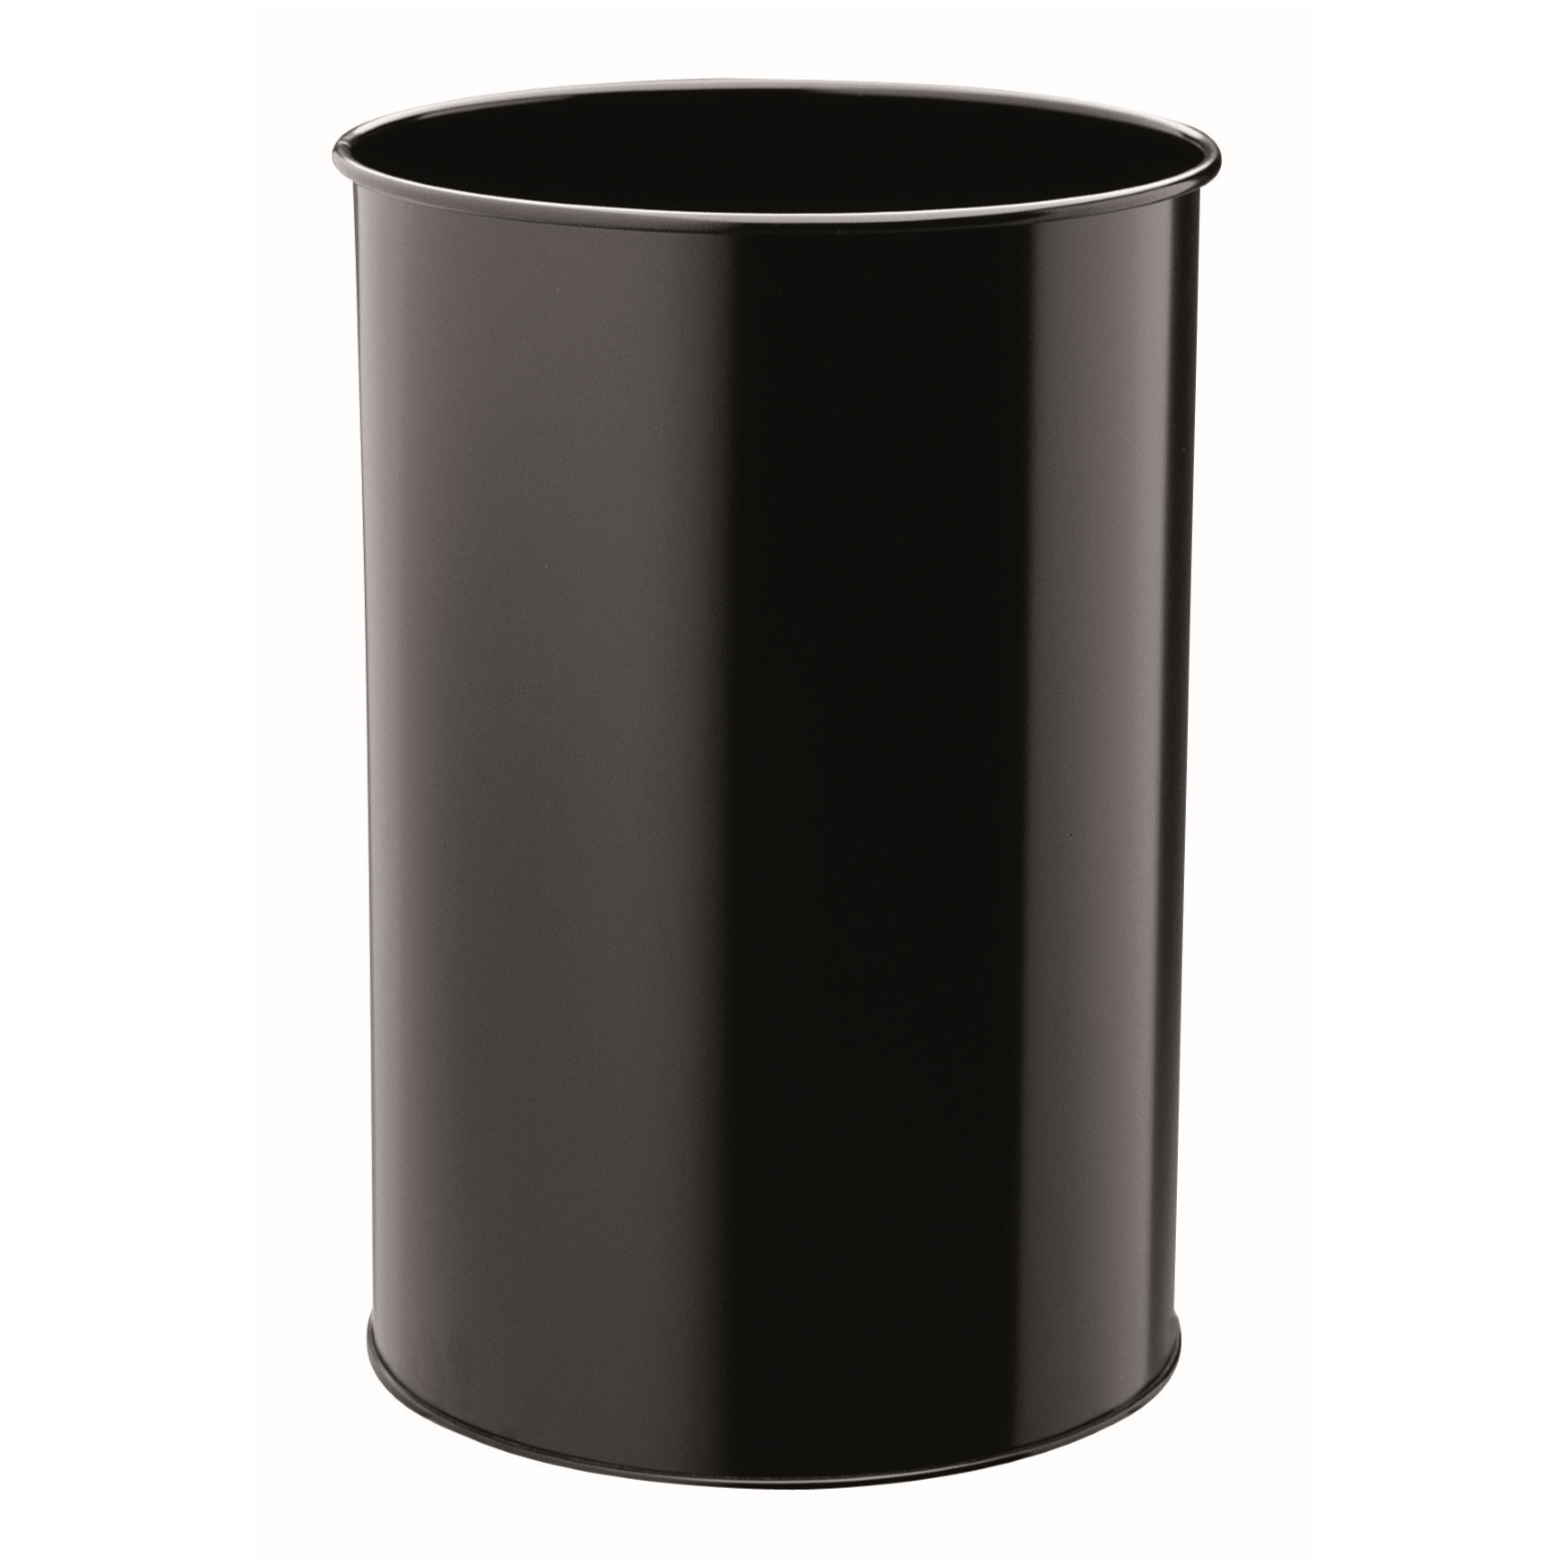 Корзина металлическая черная. Металлическая круглая мусорная корзина durable. Durable металлическая круглая мусорка.